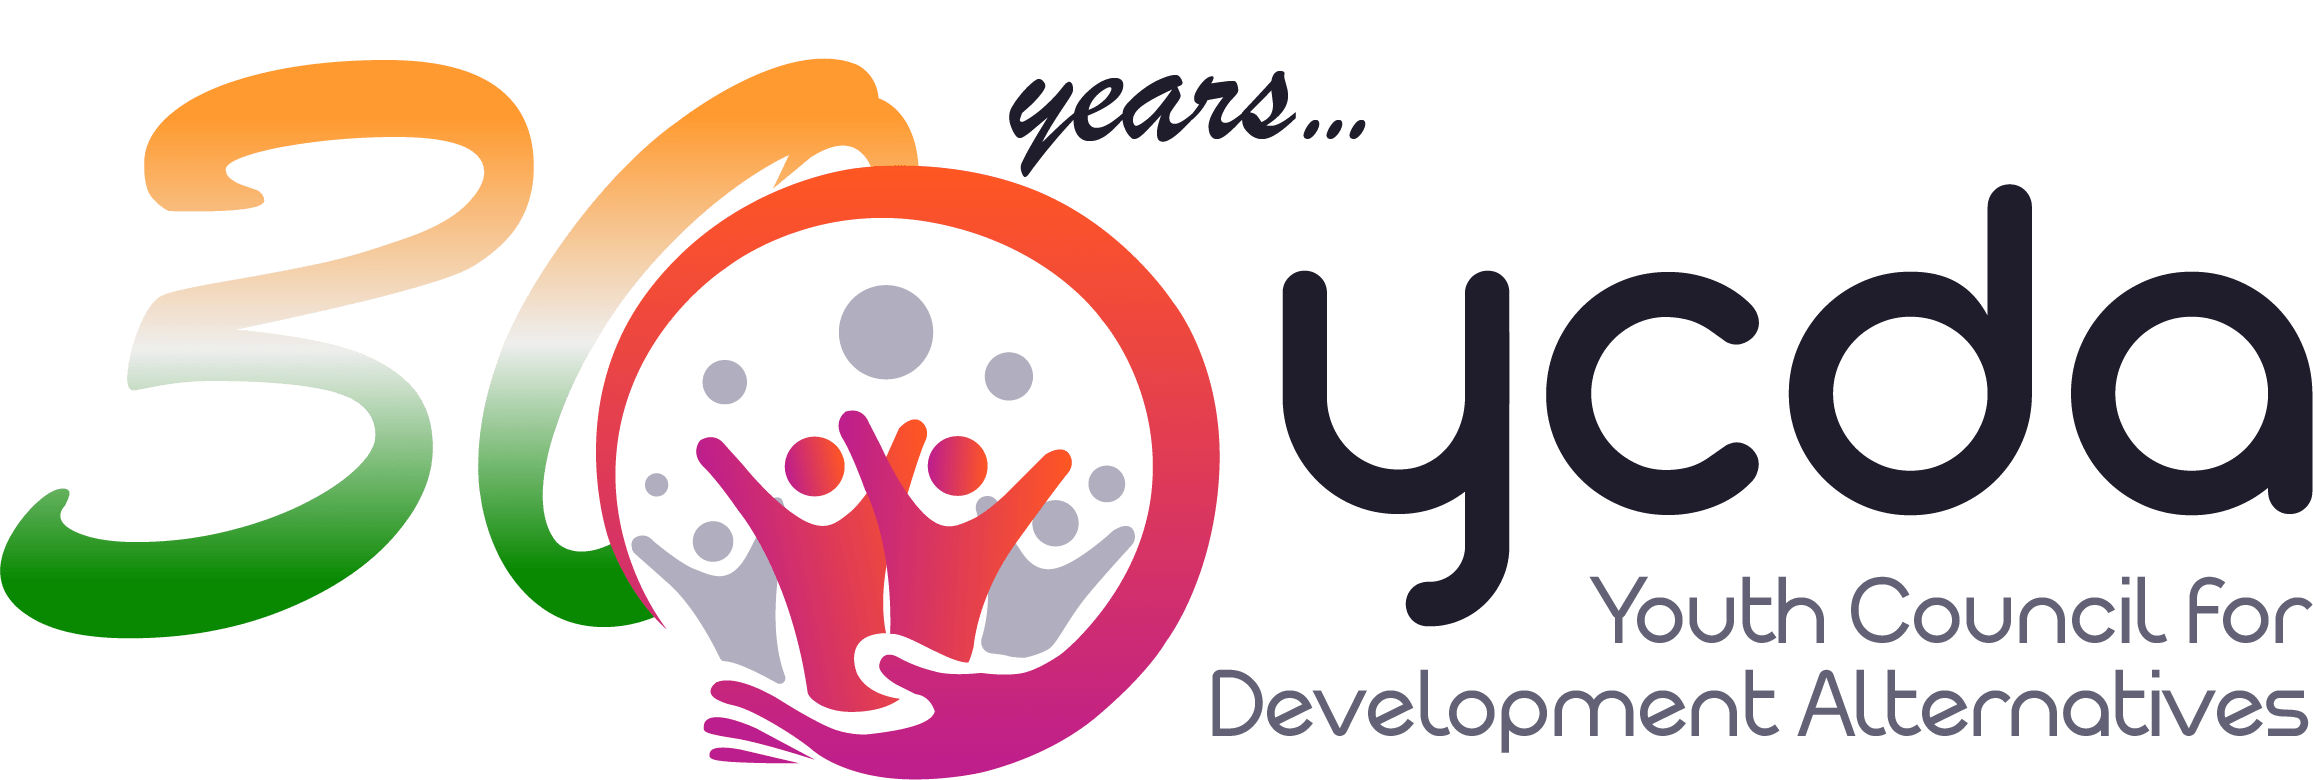 Youth Council for Development Alternatives (YCDA) logo